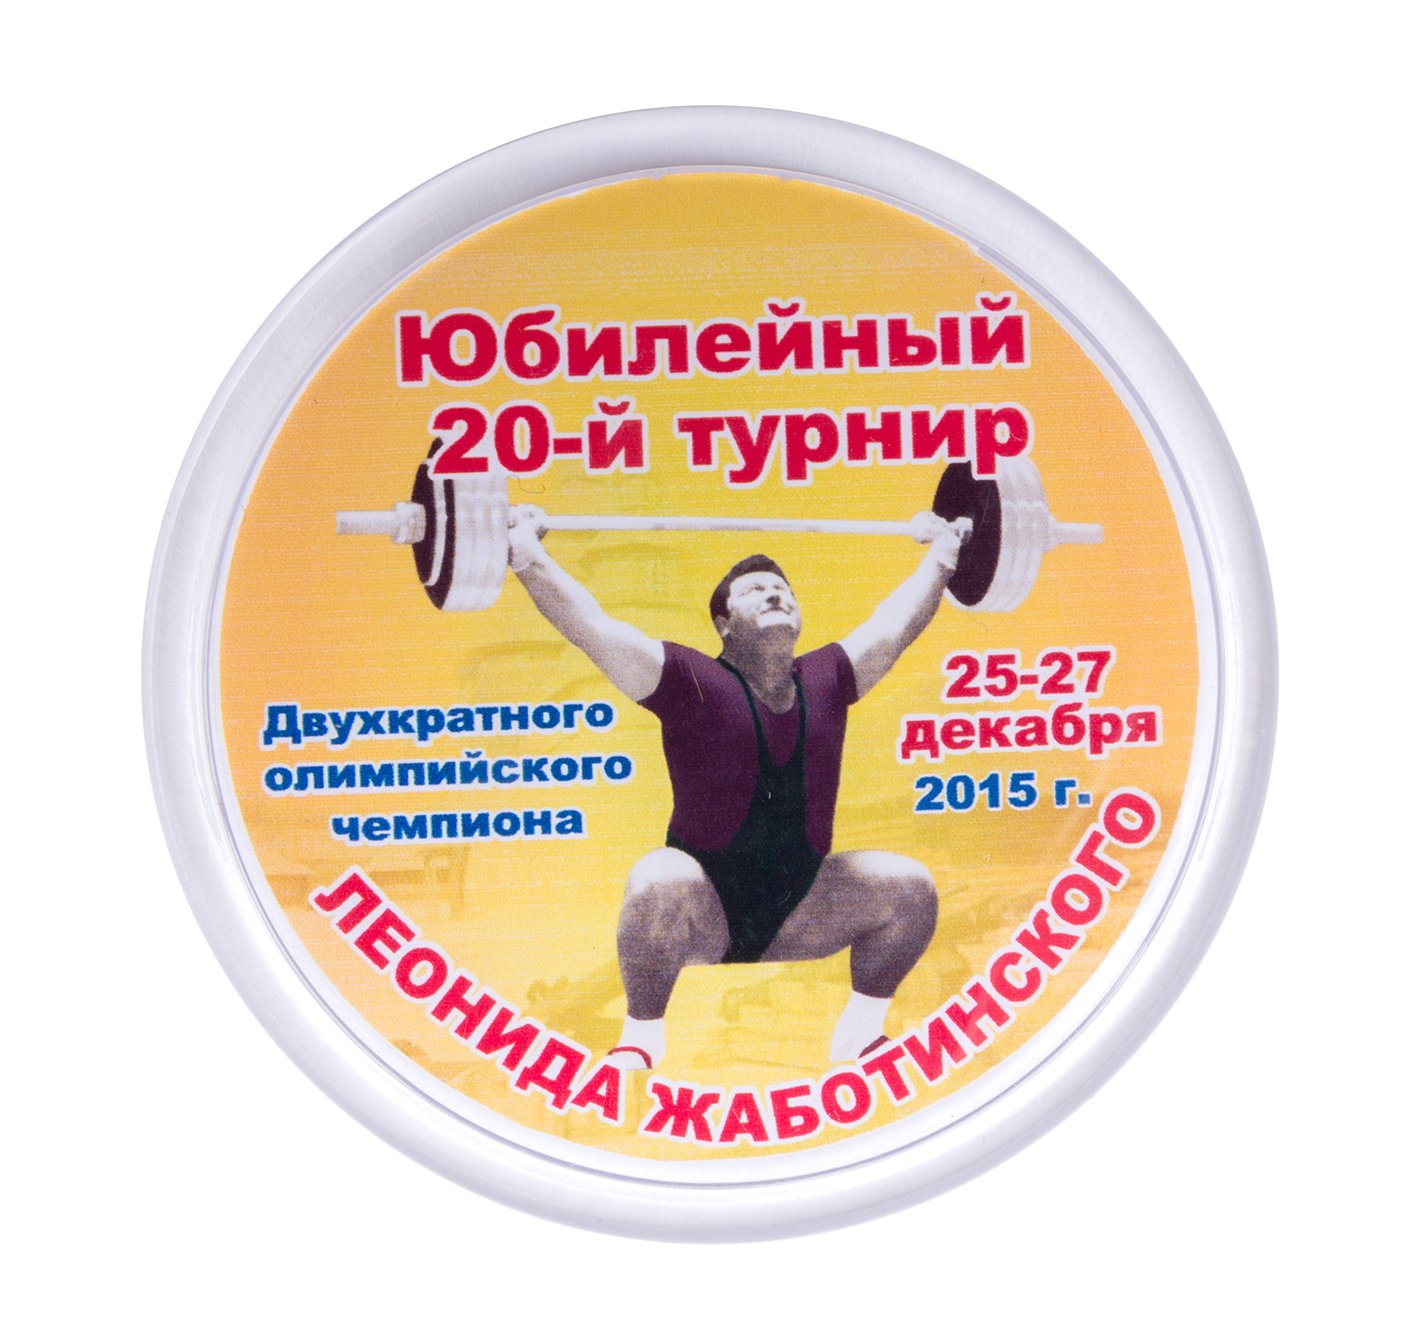 Souvenir magnet Leonid Zhabotinsky - Jubilee tournament